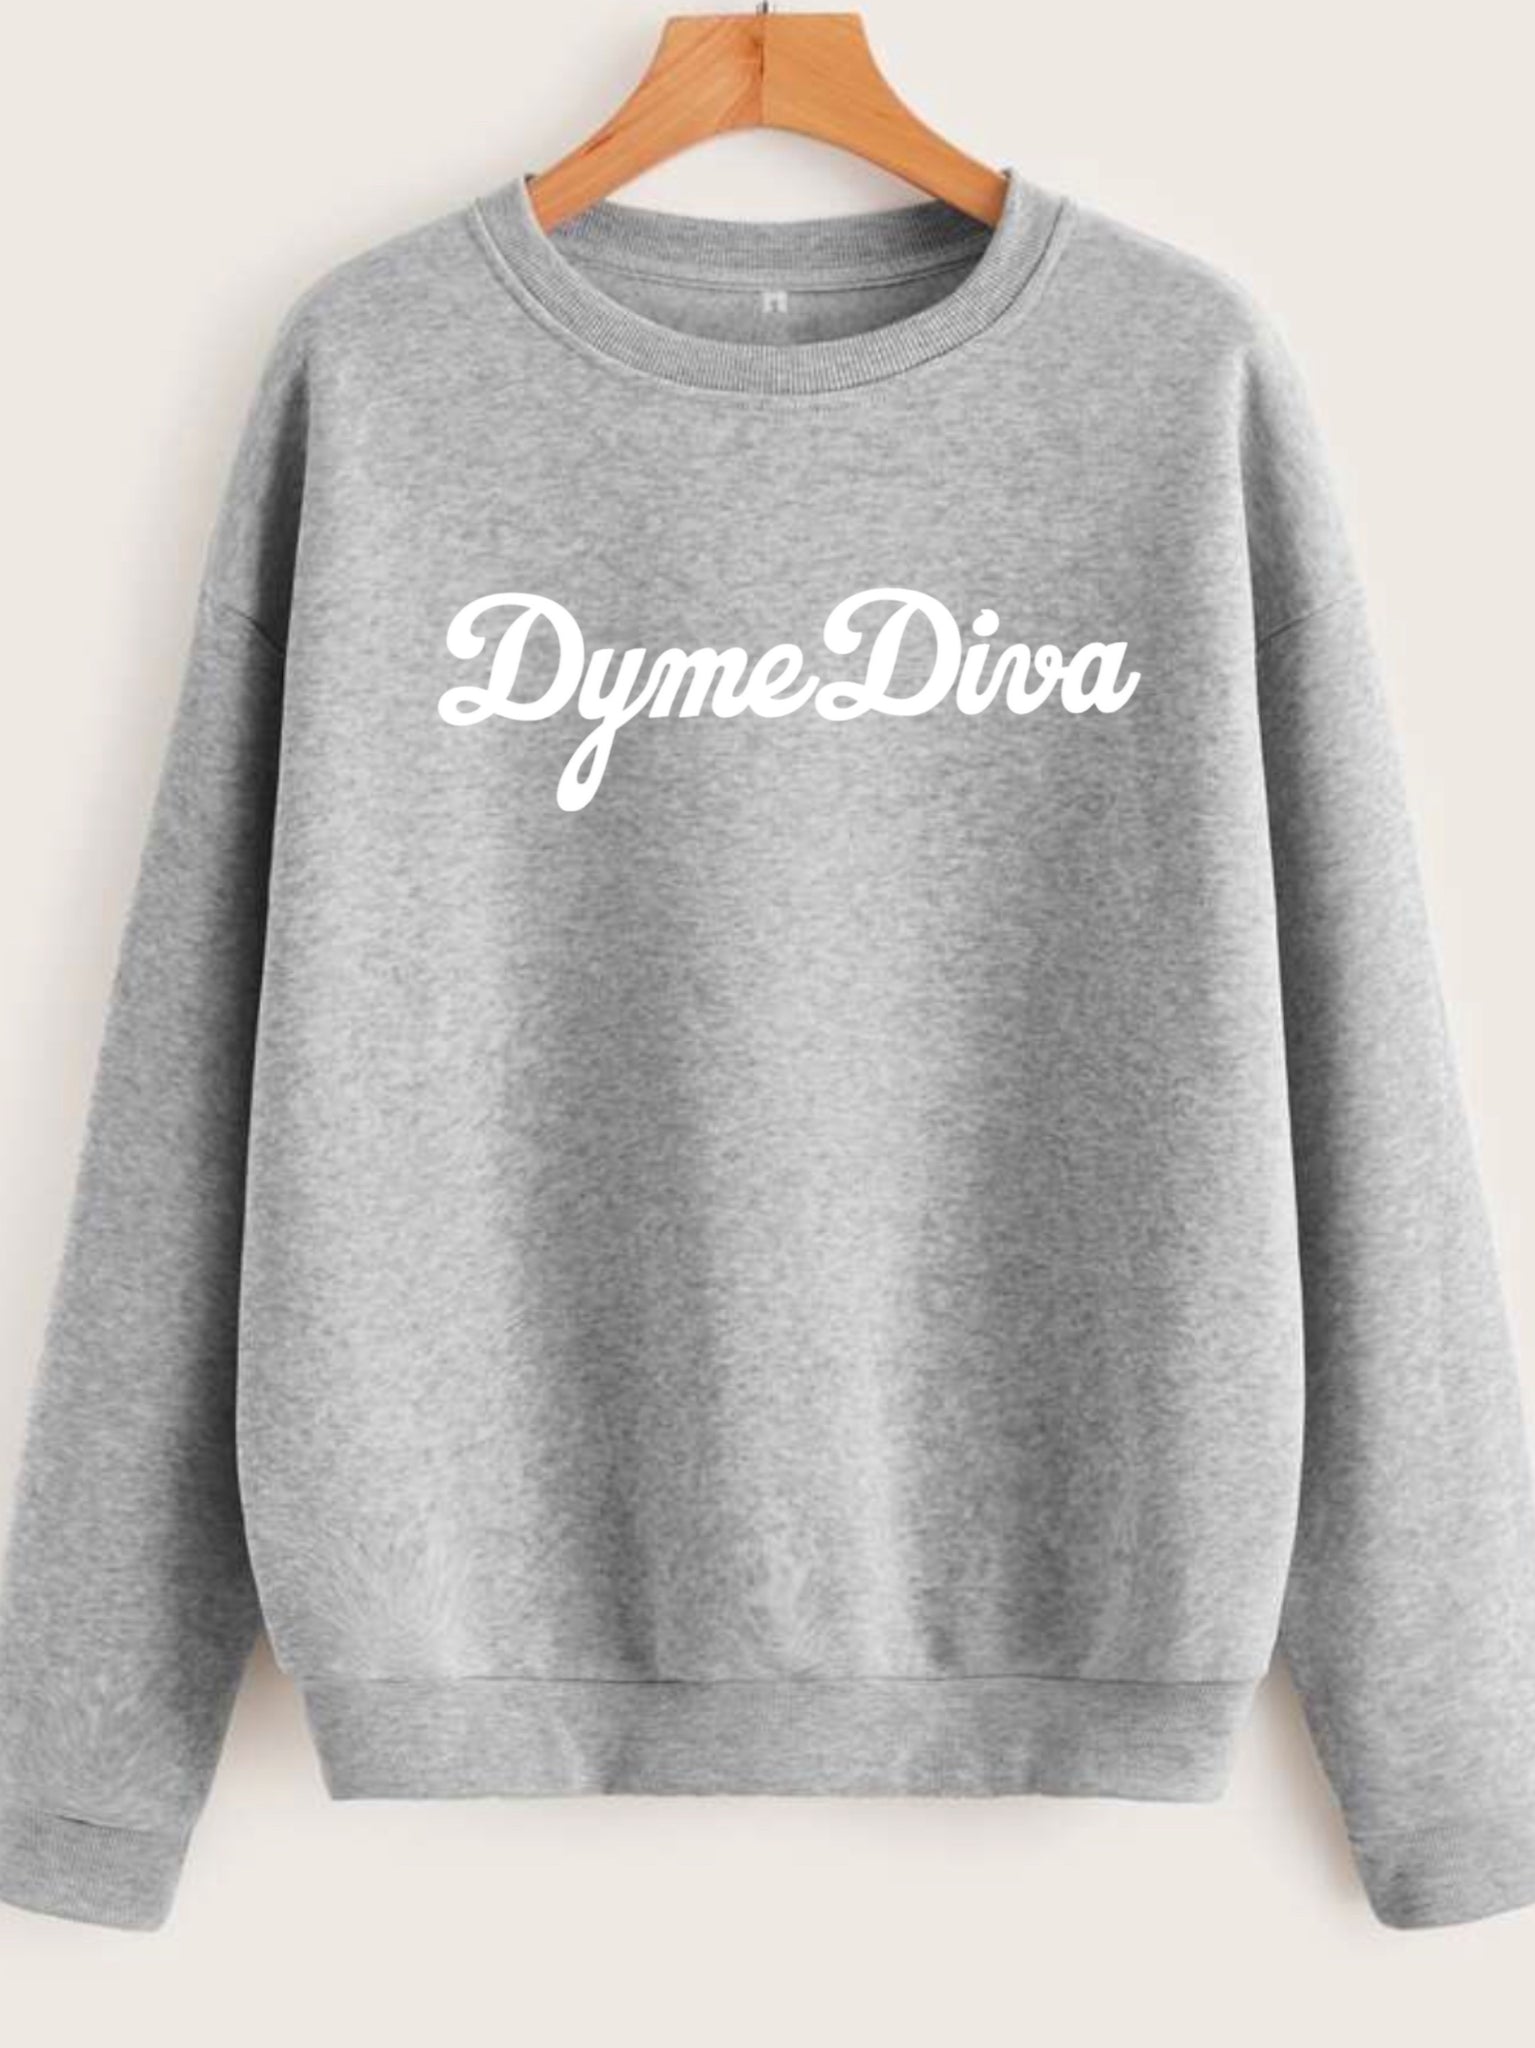 Classic DymeDiva Sweater